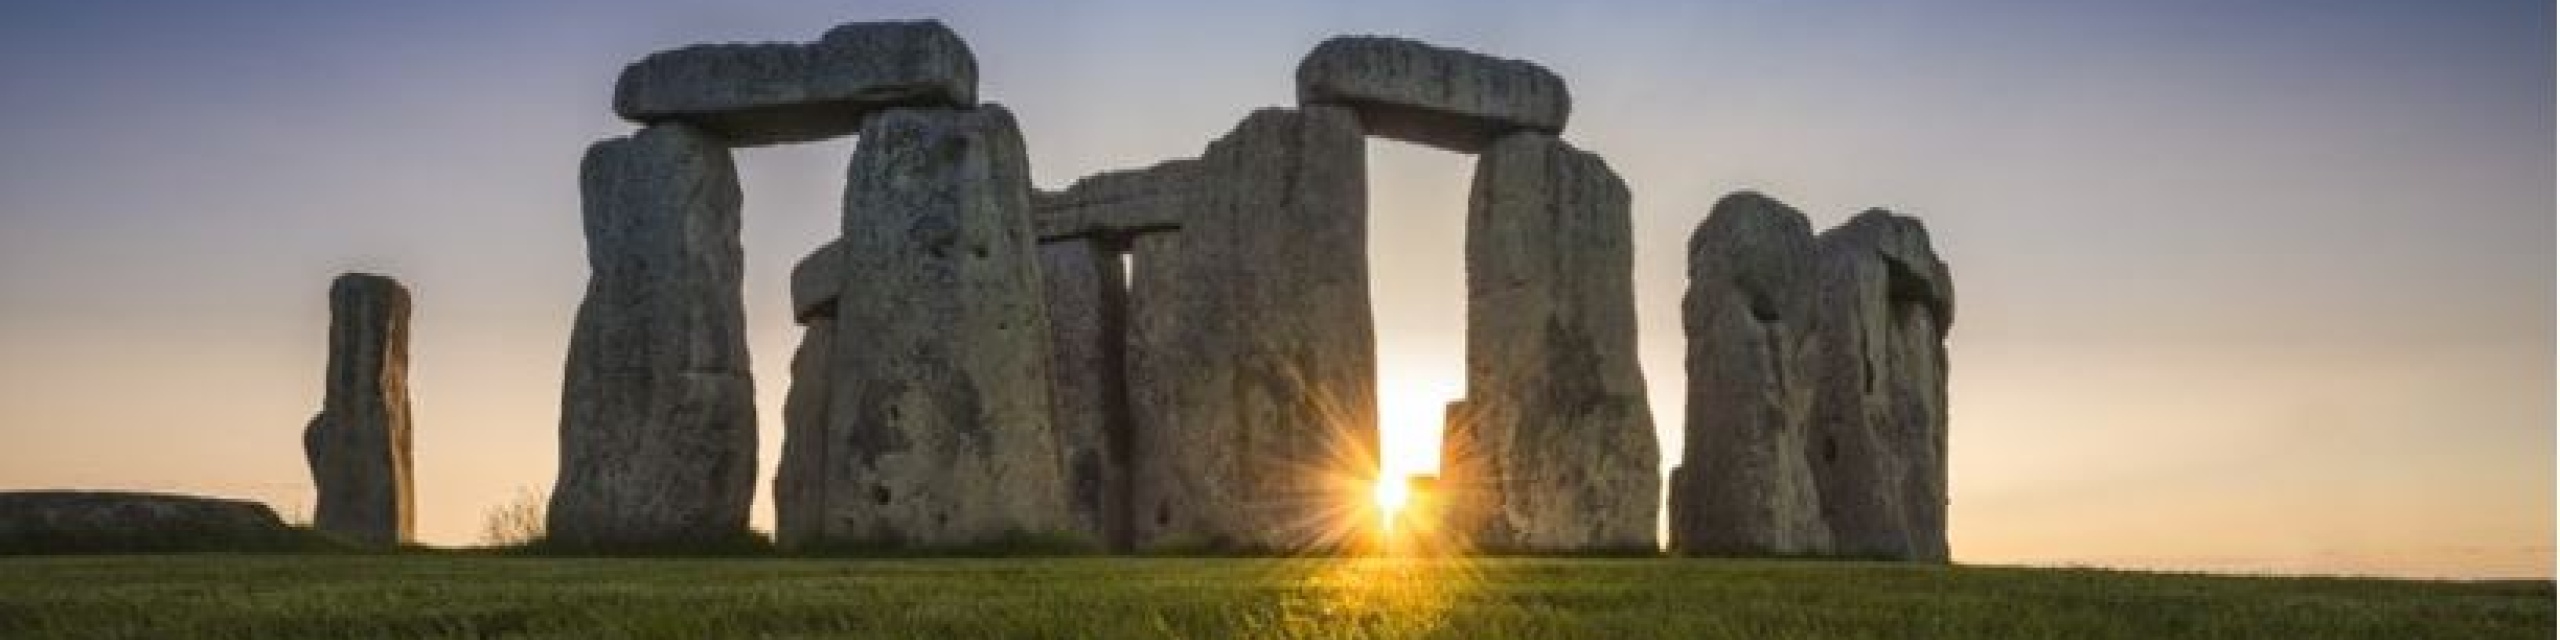 XRF Sheds Light on the Origins of Stonehenge